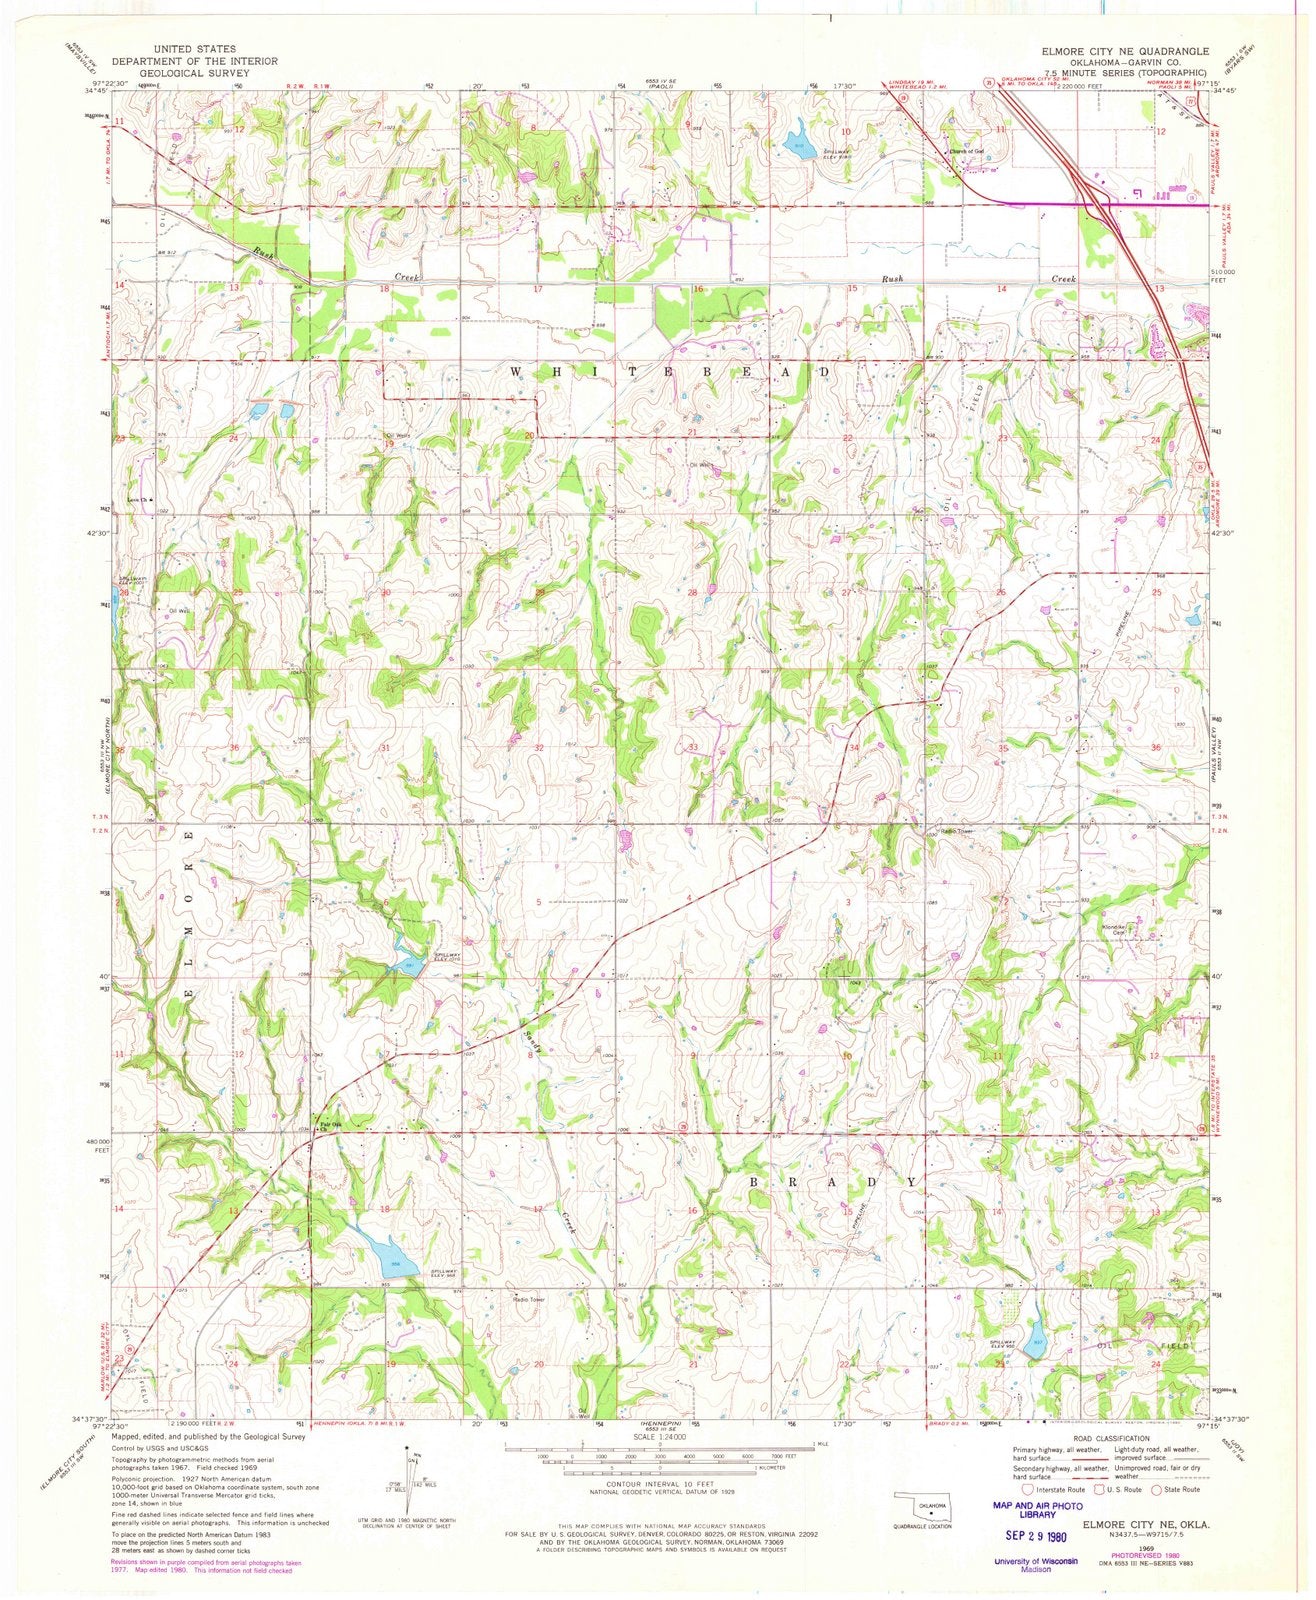 1969 Elmore City, OK - Oklahoma - USGS Topographic Map